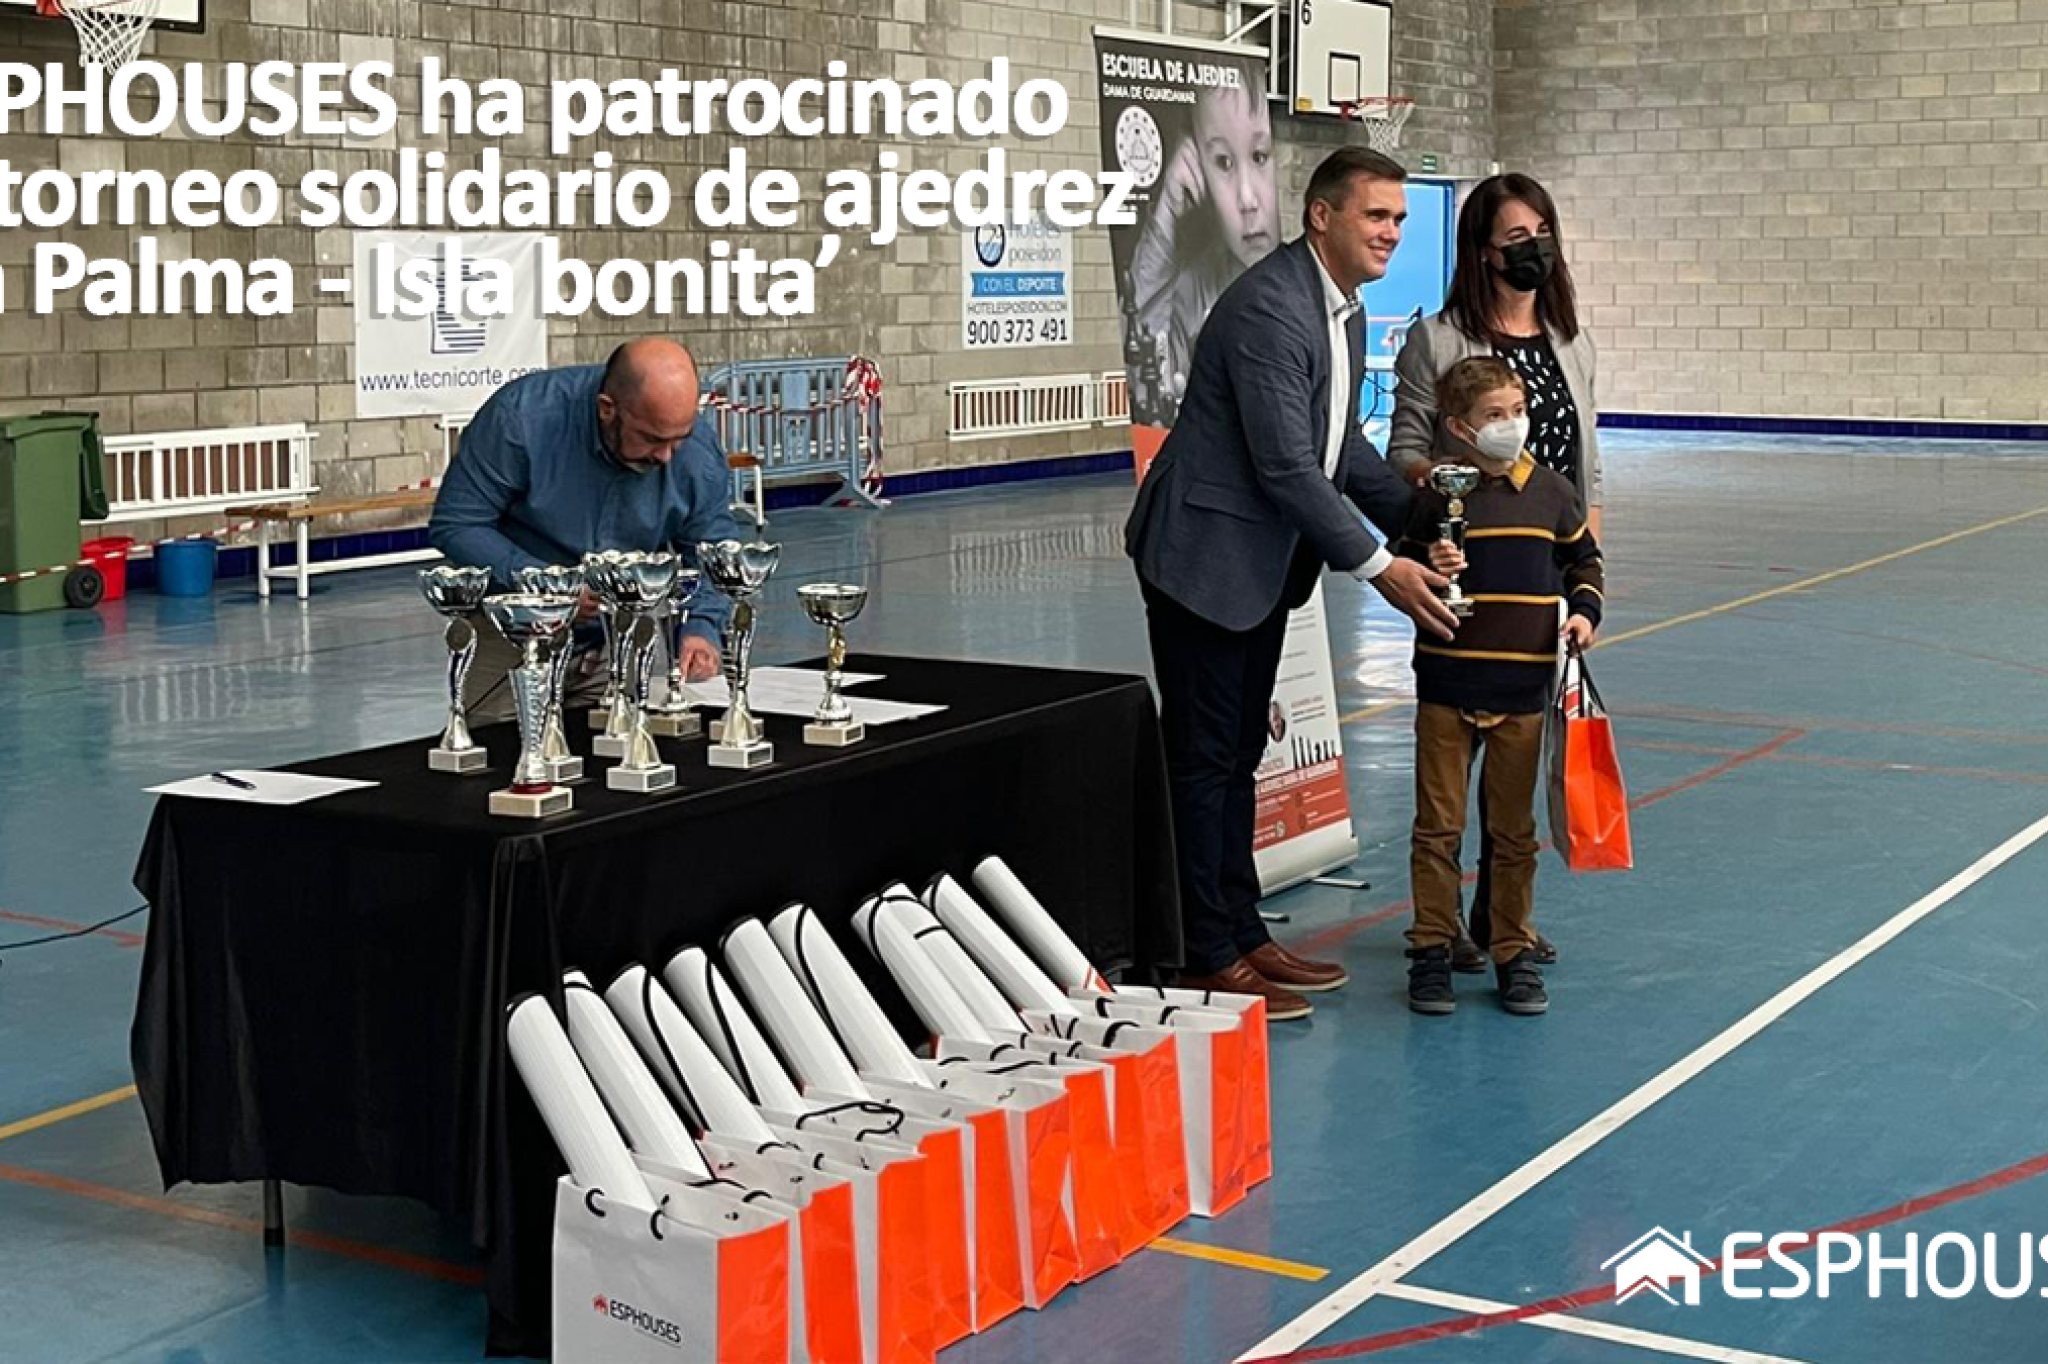 ESPHOUSES has sponsored the solidarity chess tournament 'La Palma- Isla bonita'.